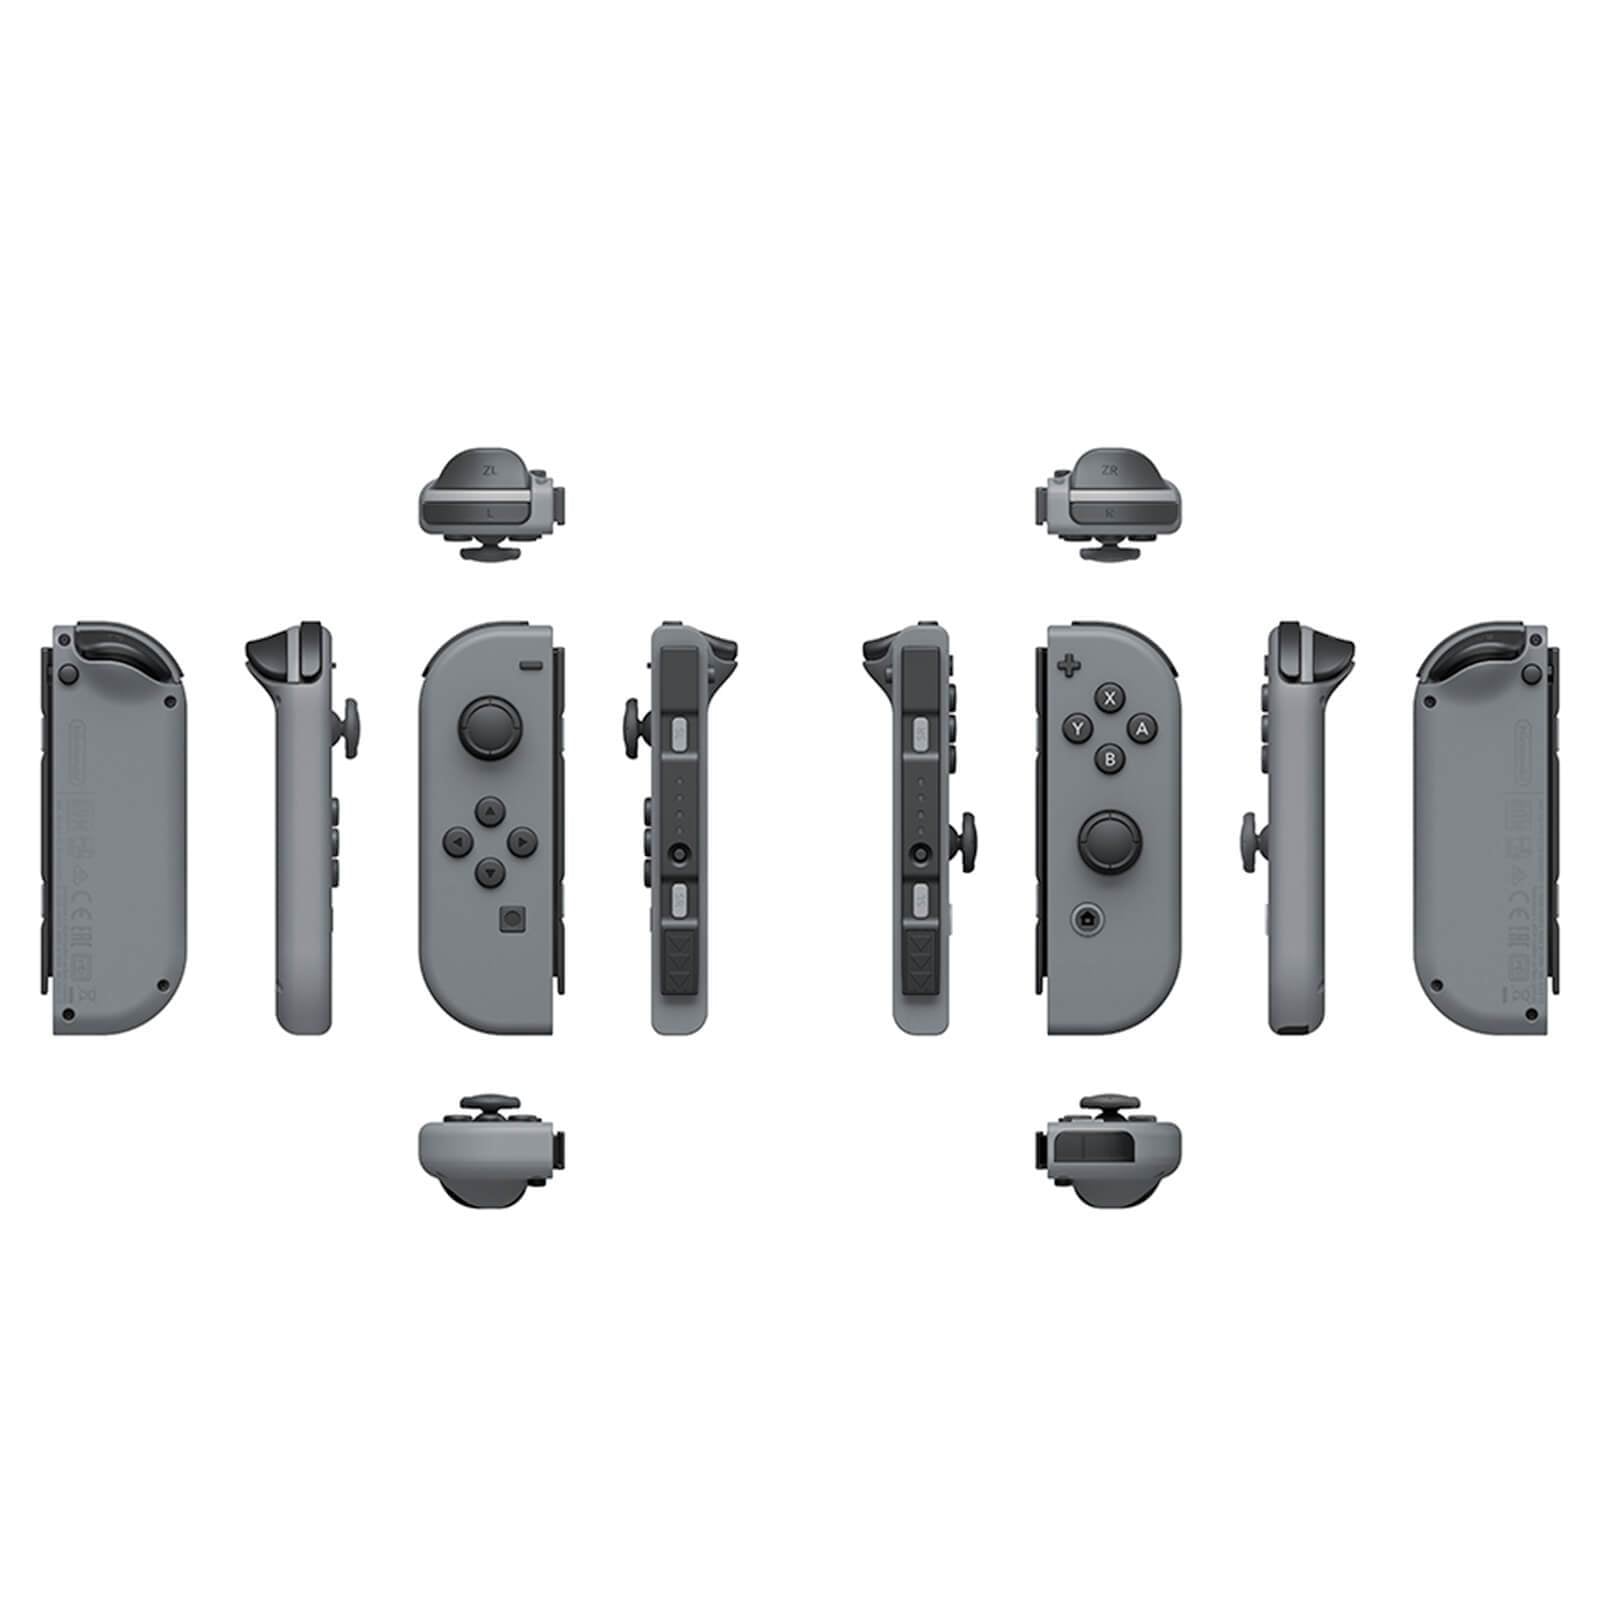 Nintendo Switch Joy-Con (L/R) - Gray Wireless Controllers